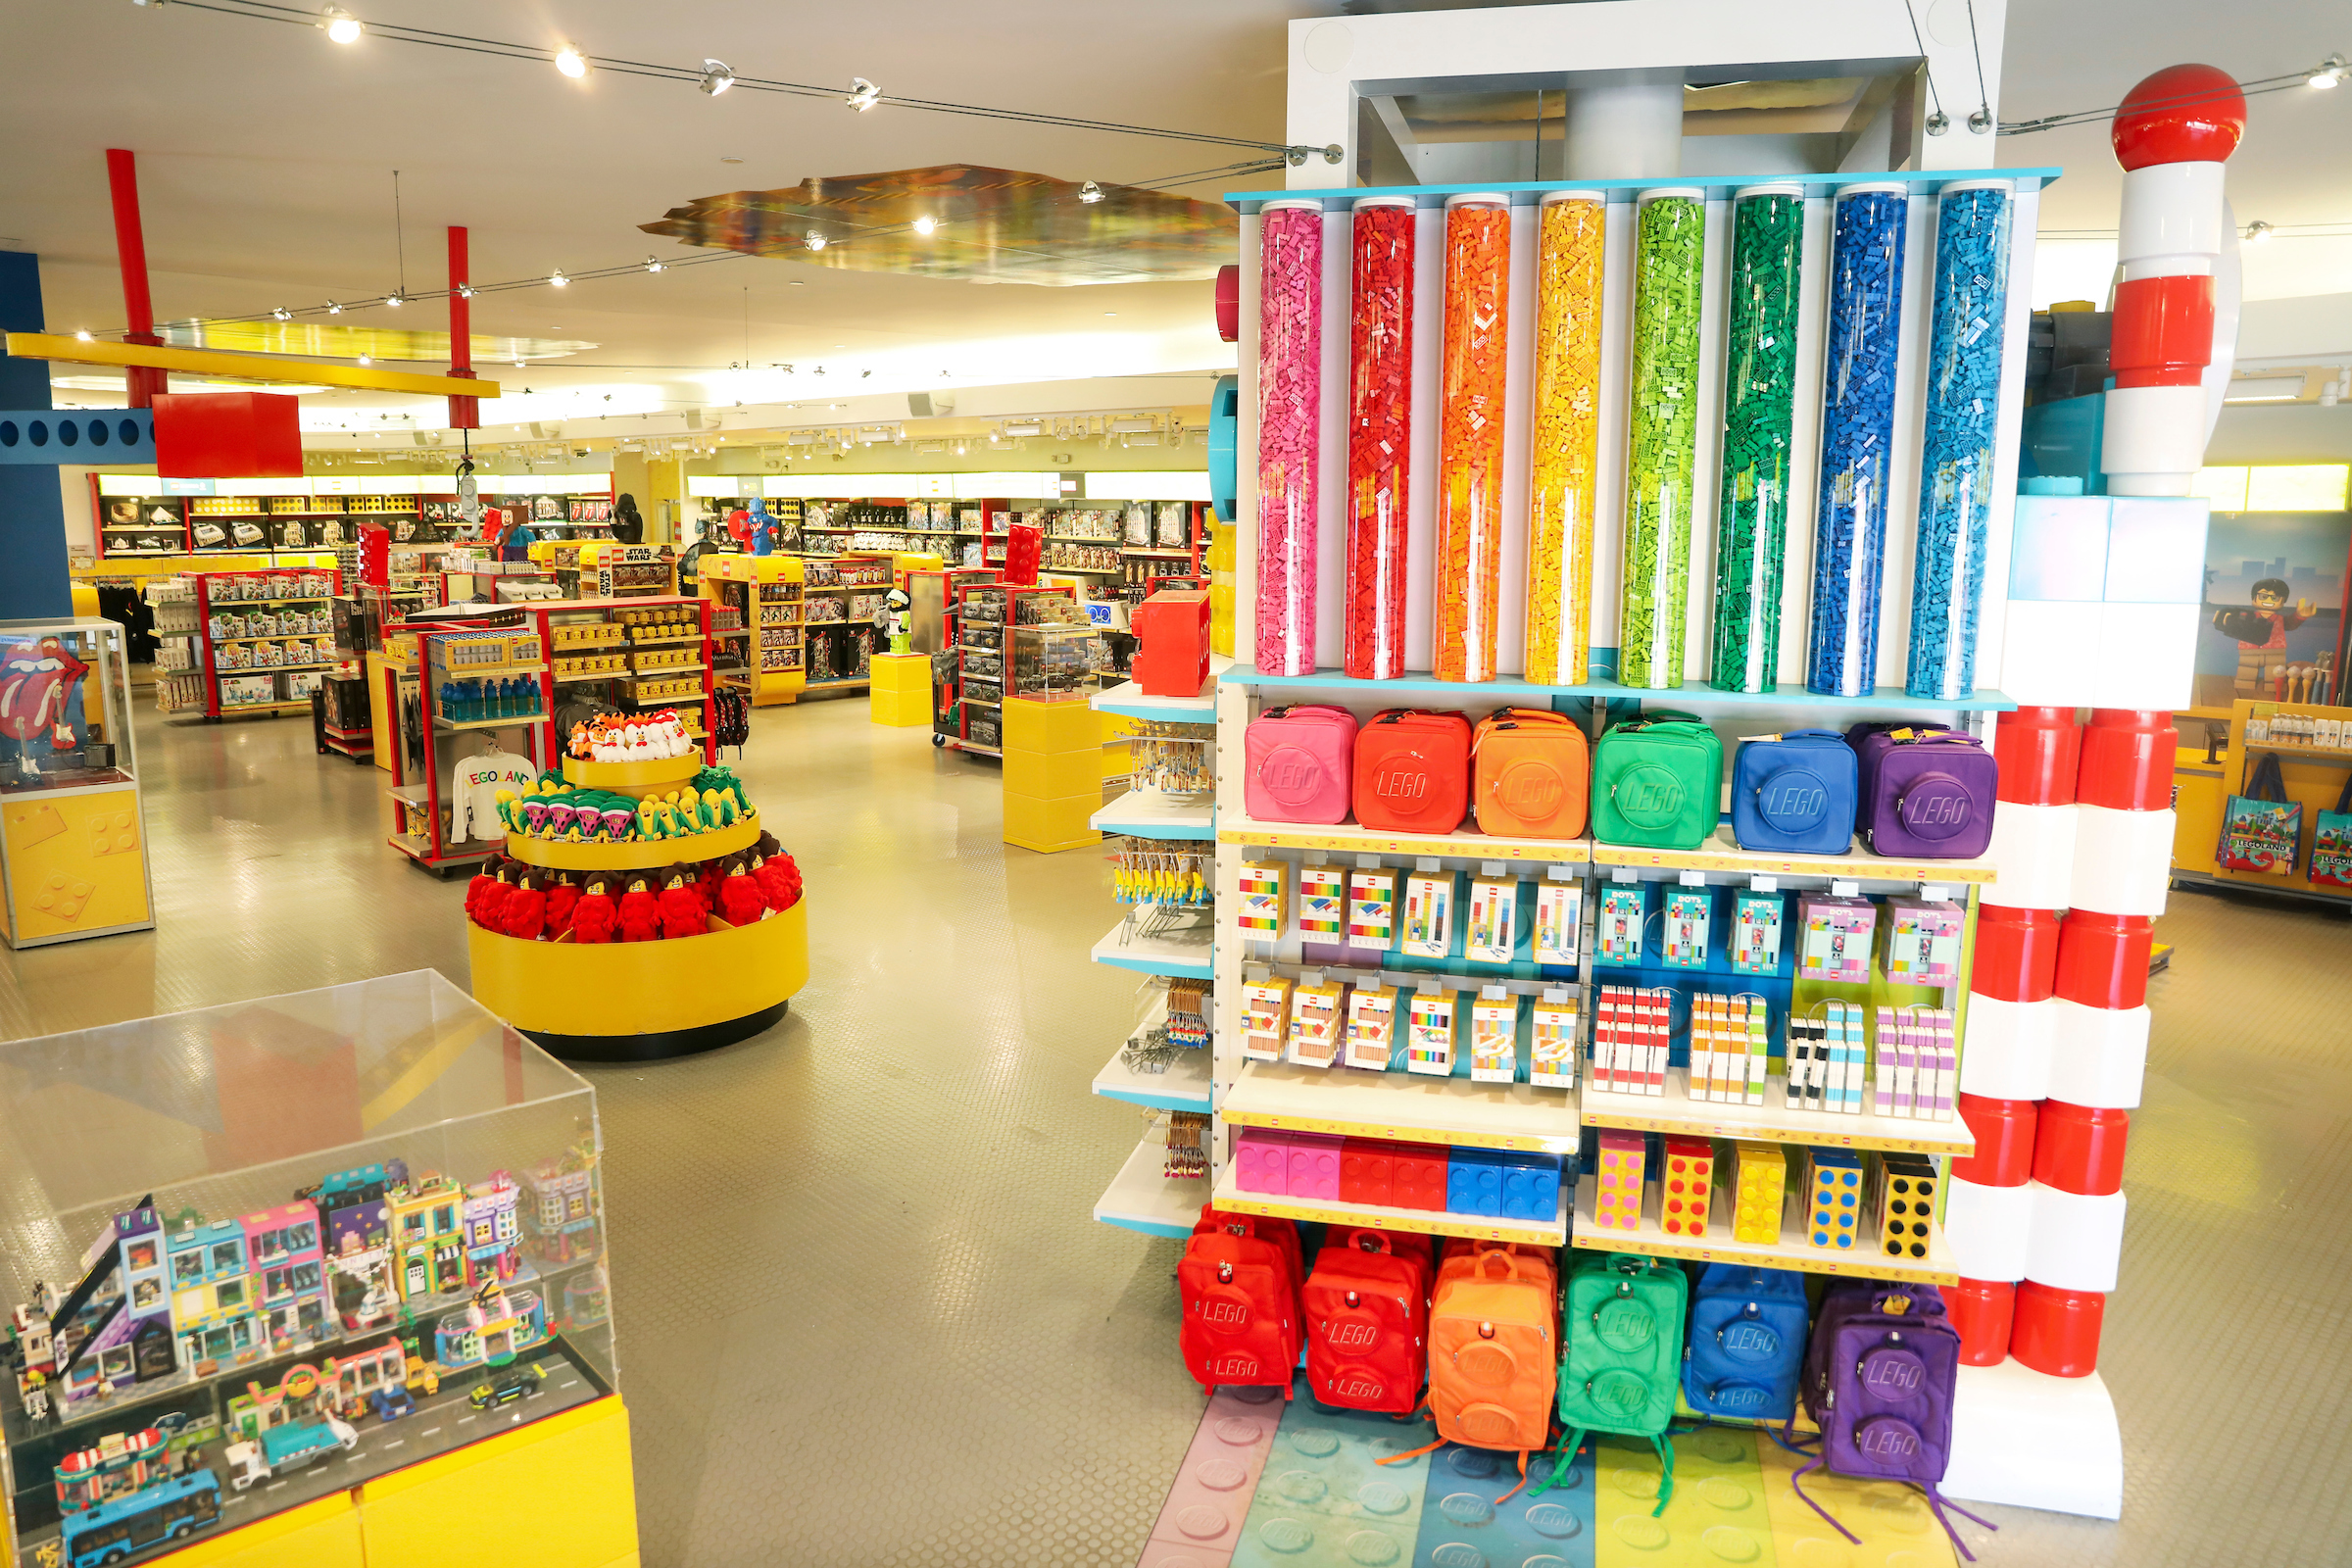 LEGO® Creator™ Birthday Train – LEGOLAND® California Resort Online Shop